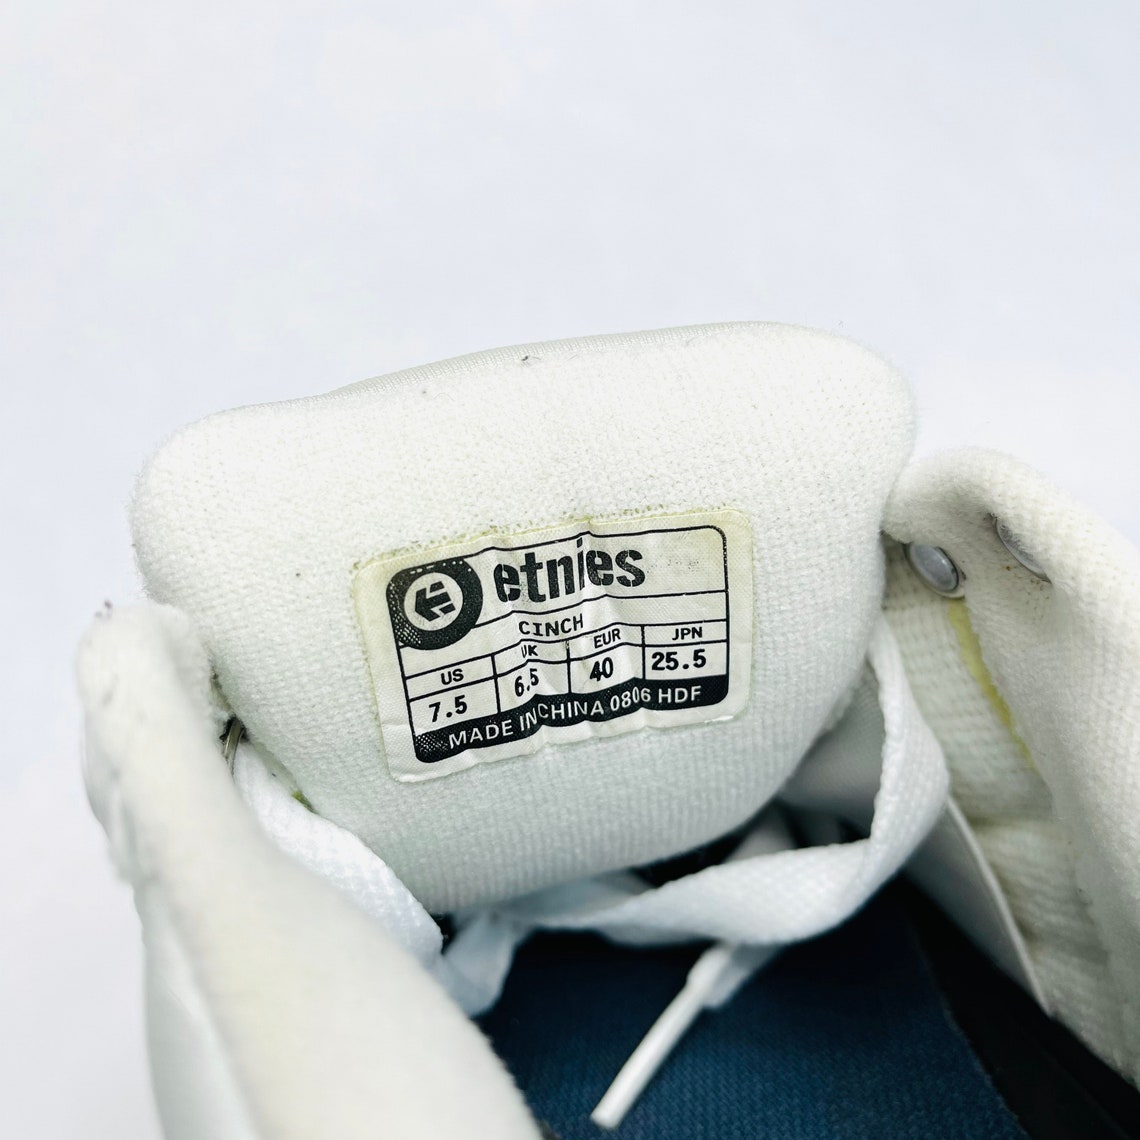 Vintage 90s Y2K etnies Cinch Chunky Skate Shoes White/Grey | Etsy